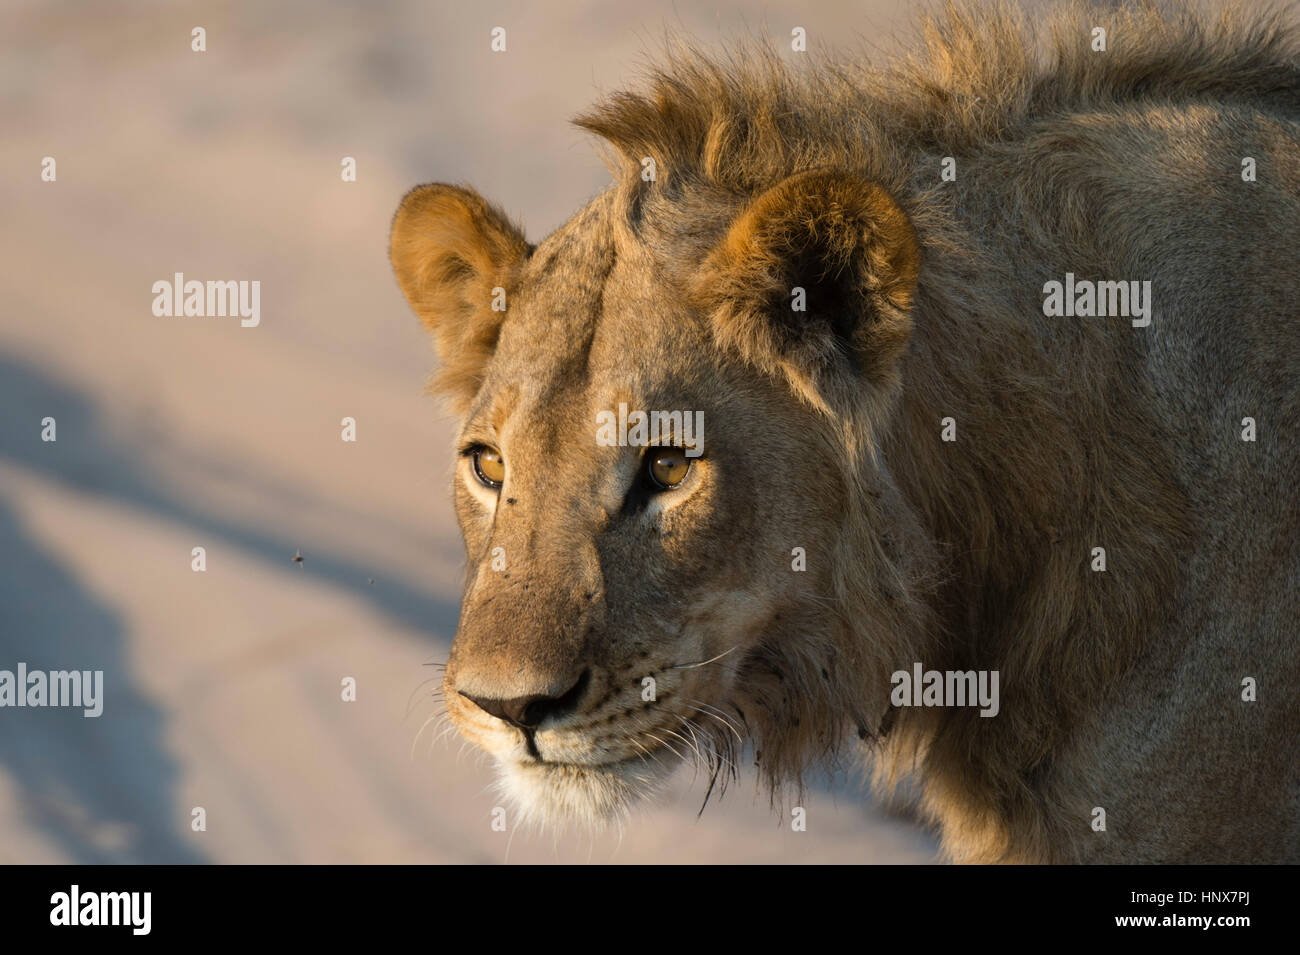 Lion (Panthera leo), Savuti marsh, Chobe National Park, Botswana Banque D'Images